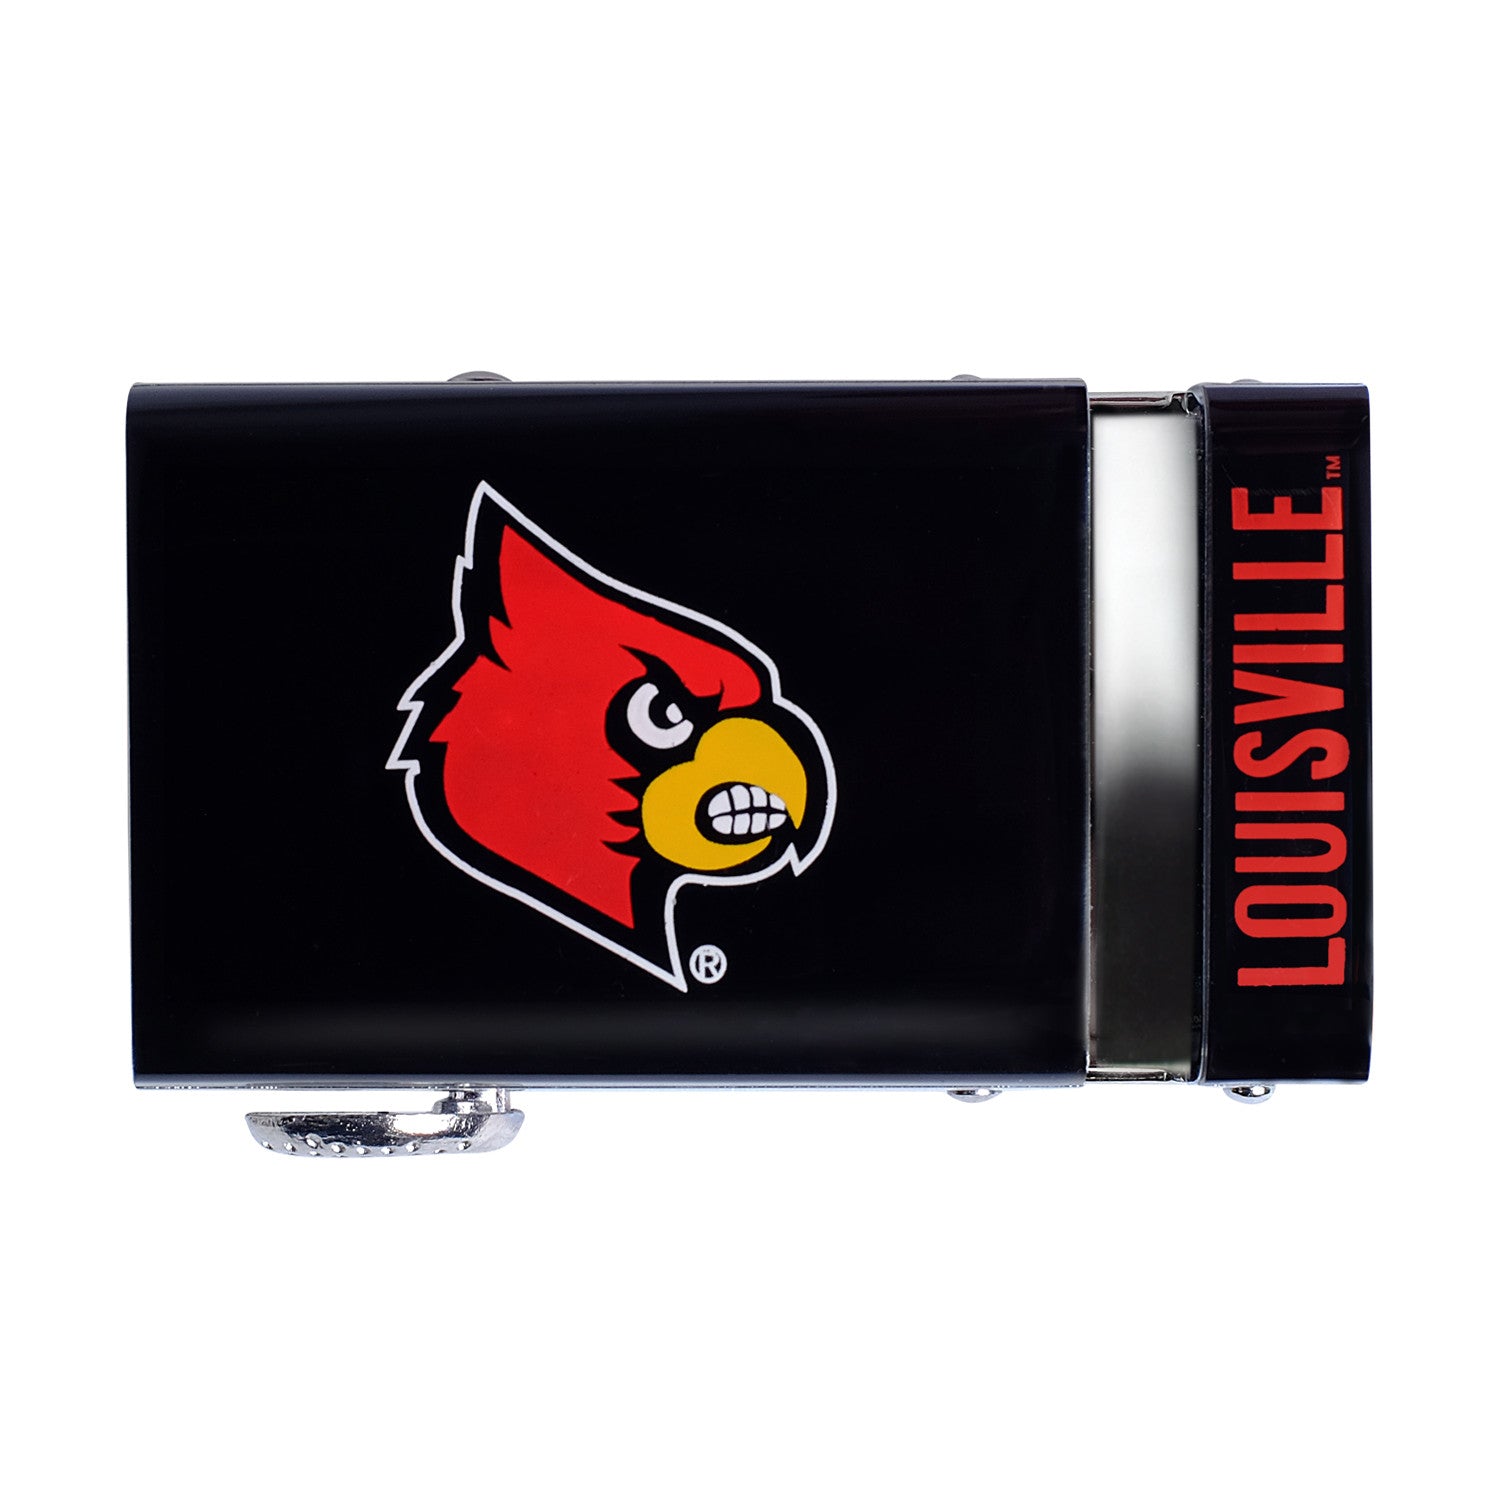 Louisville Cardinals NCAA Wallets for sale